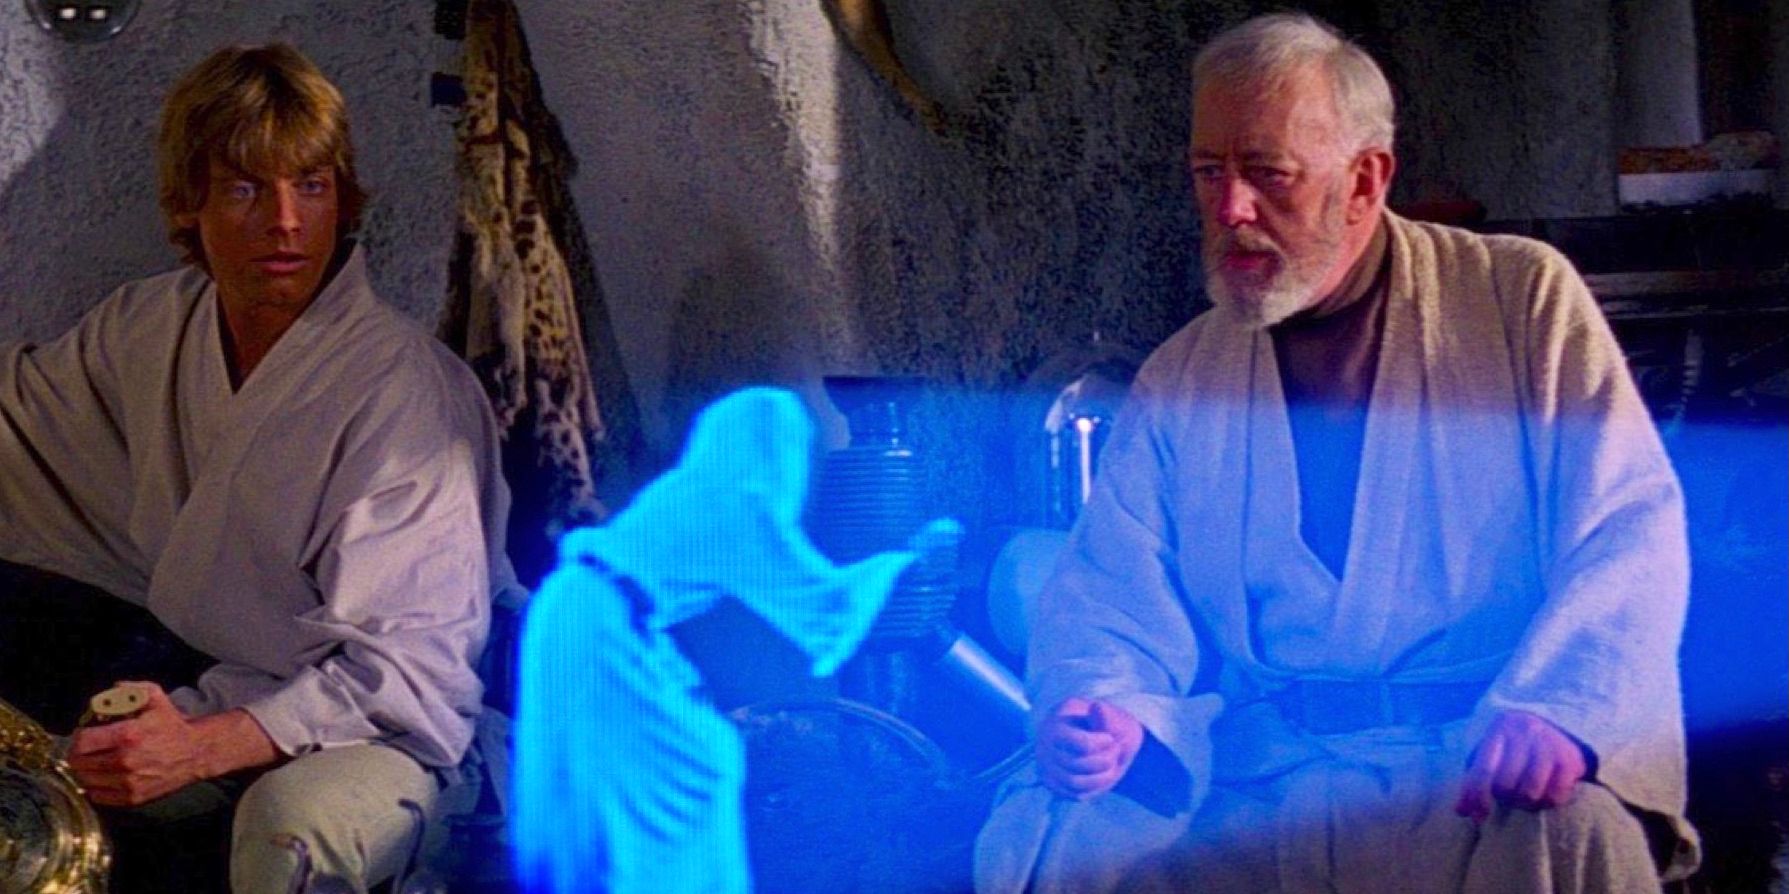 Obi-Wan Kenobi watches Princess Leia's Message with R2D2 and Luke Skywalker